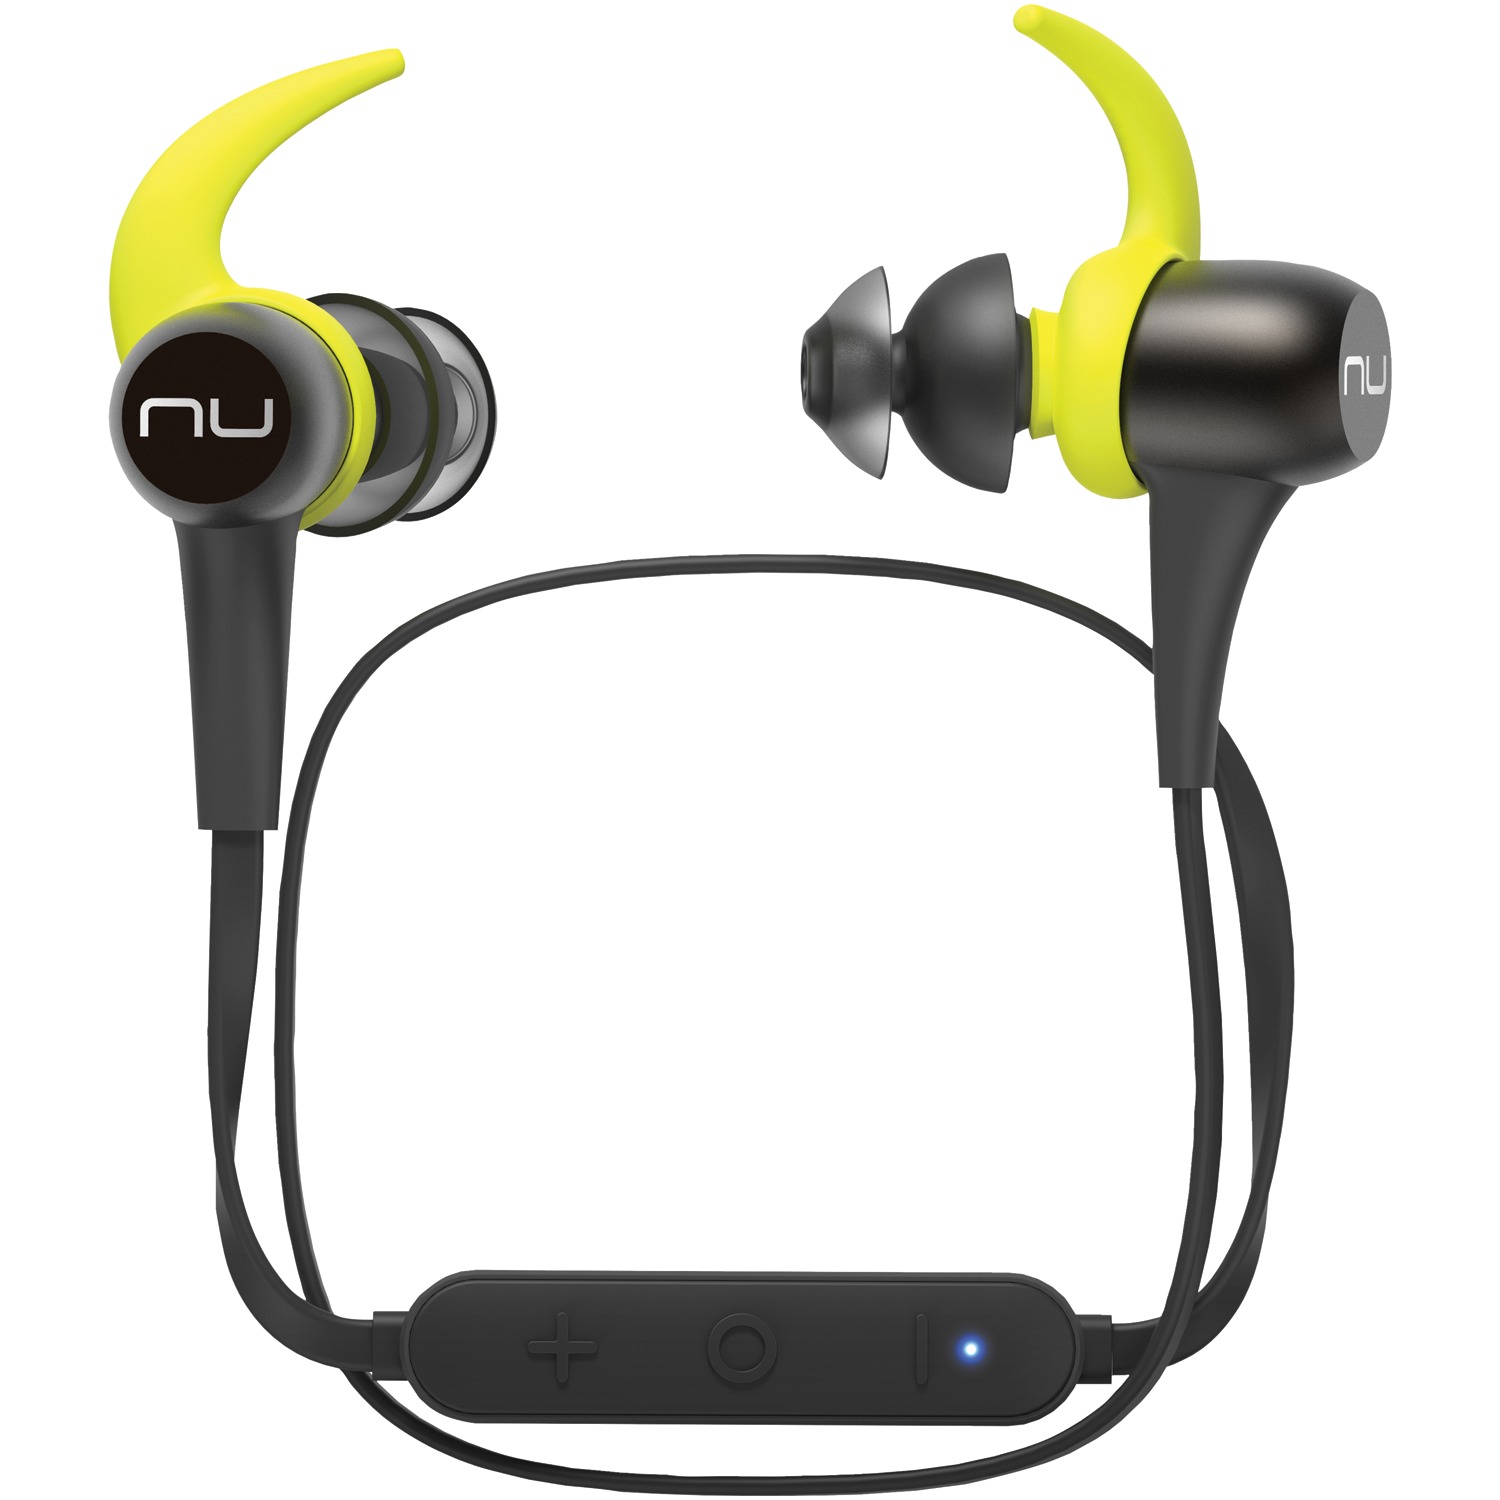 NuForce Bluetooth Sports In-EarHeadphones, Black, BESPORT3 - image 4 of 8